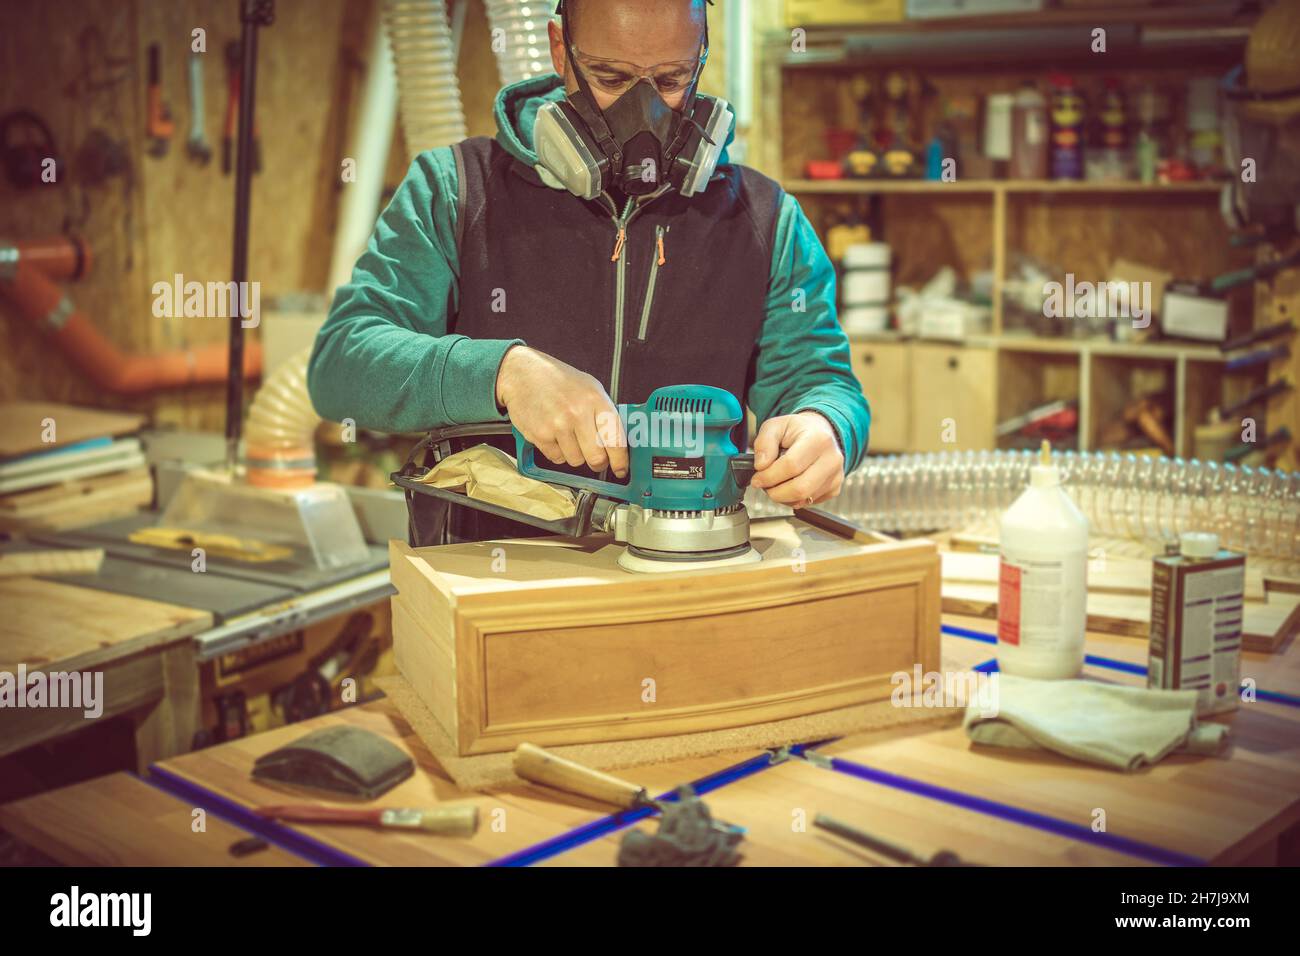 man uses an orbital sander in his workshop. Stock Photo